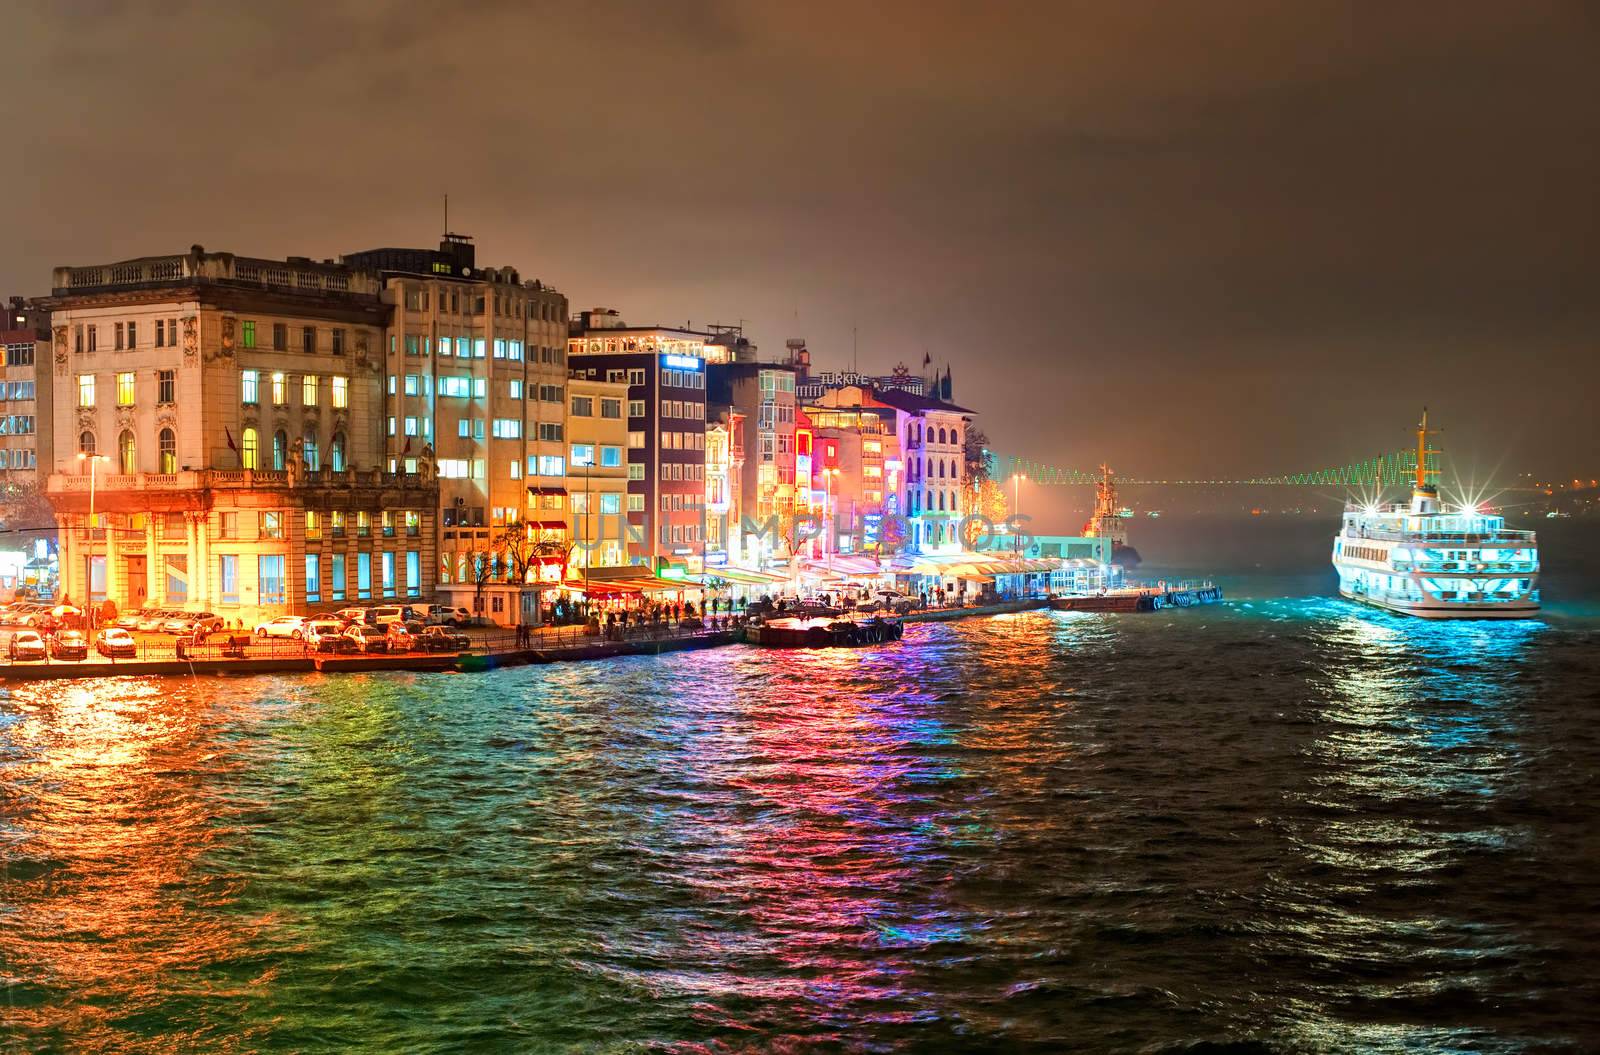 Night view of Galata quarter on Bosporus in Istanbul, Turkey